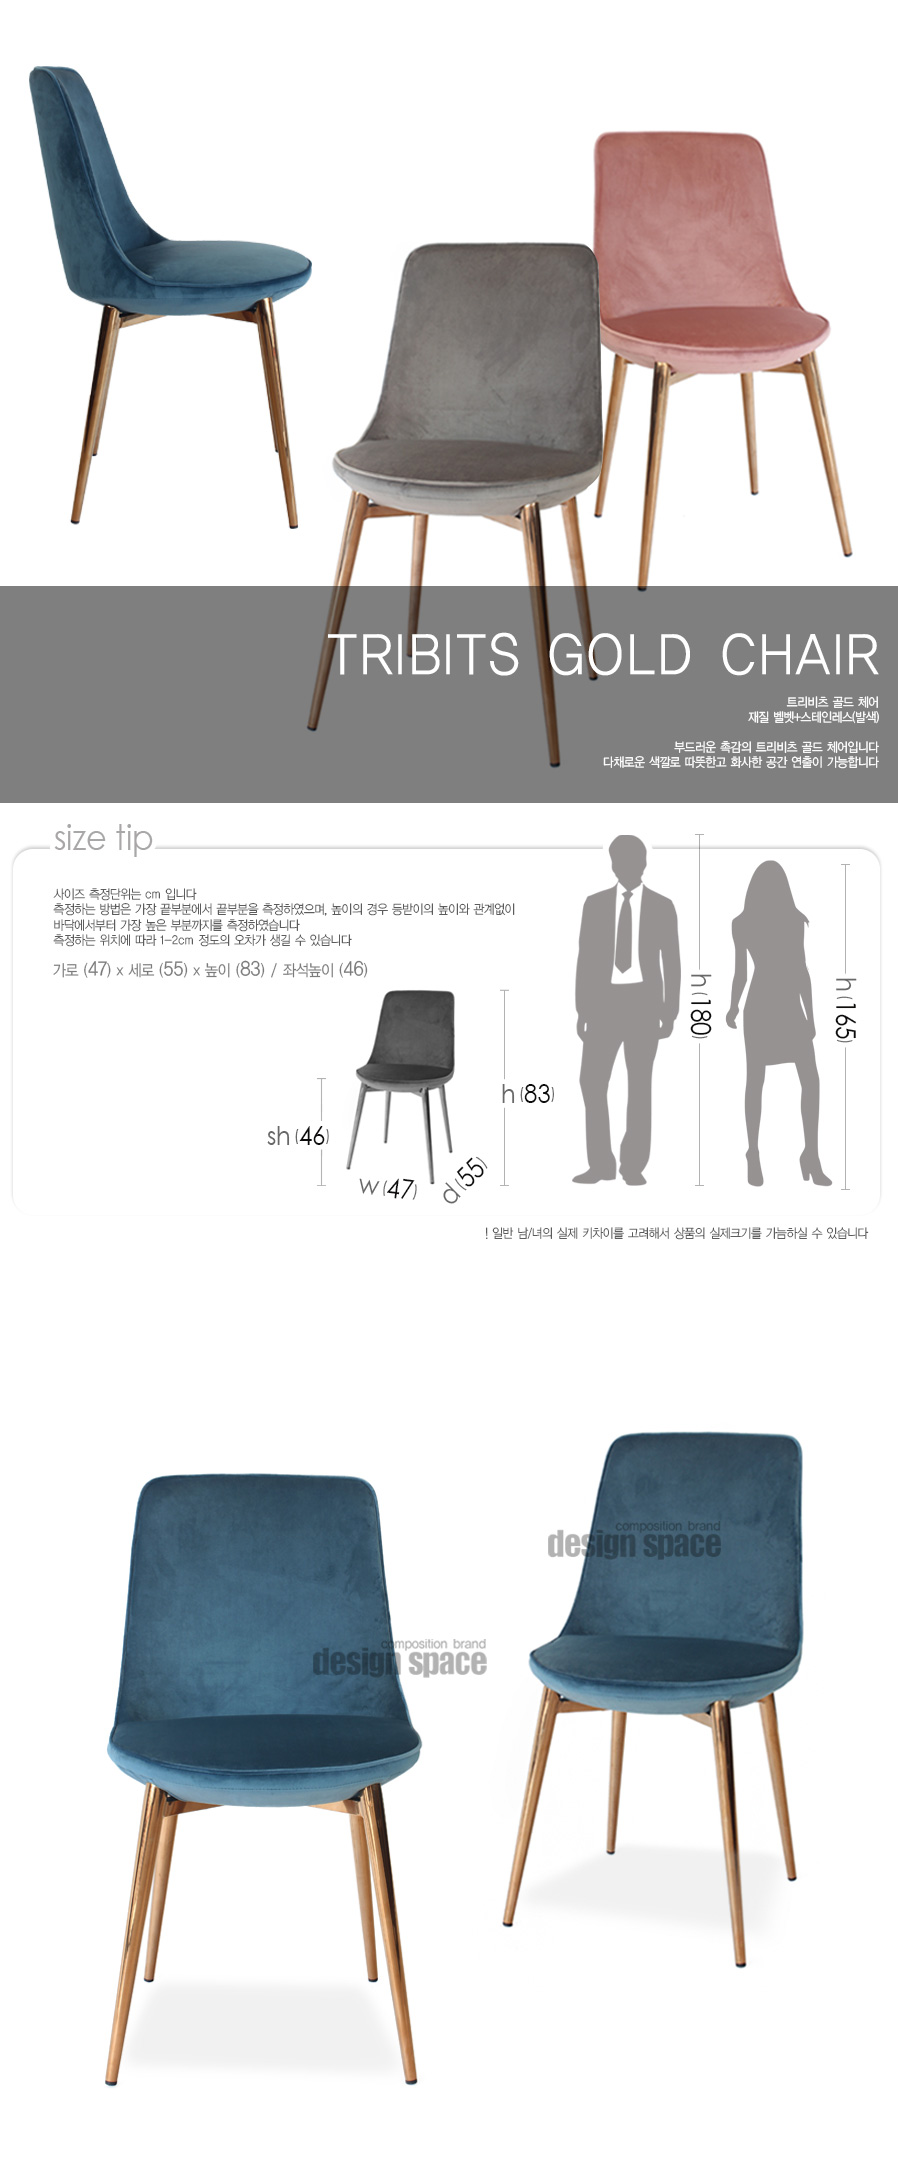 tribits-gold-chair_01.jpg